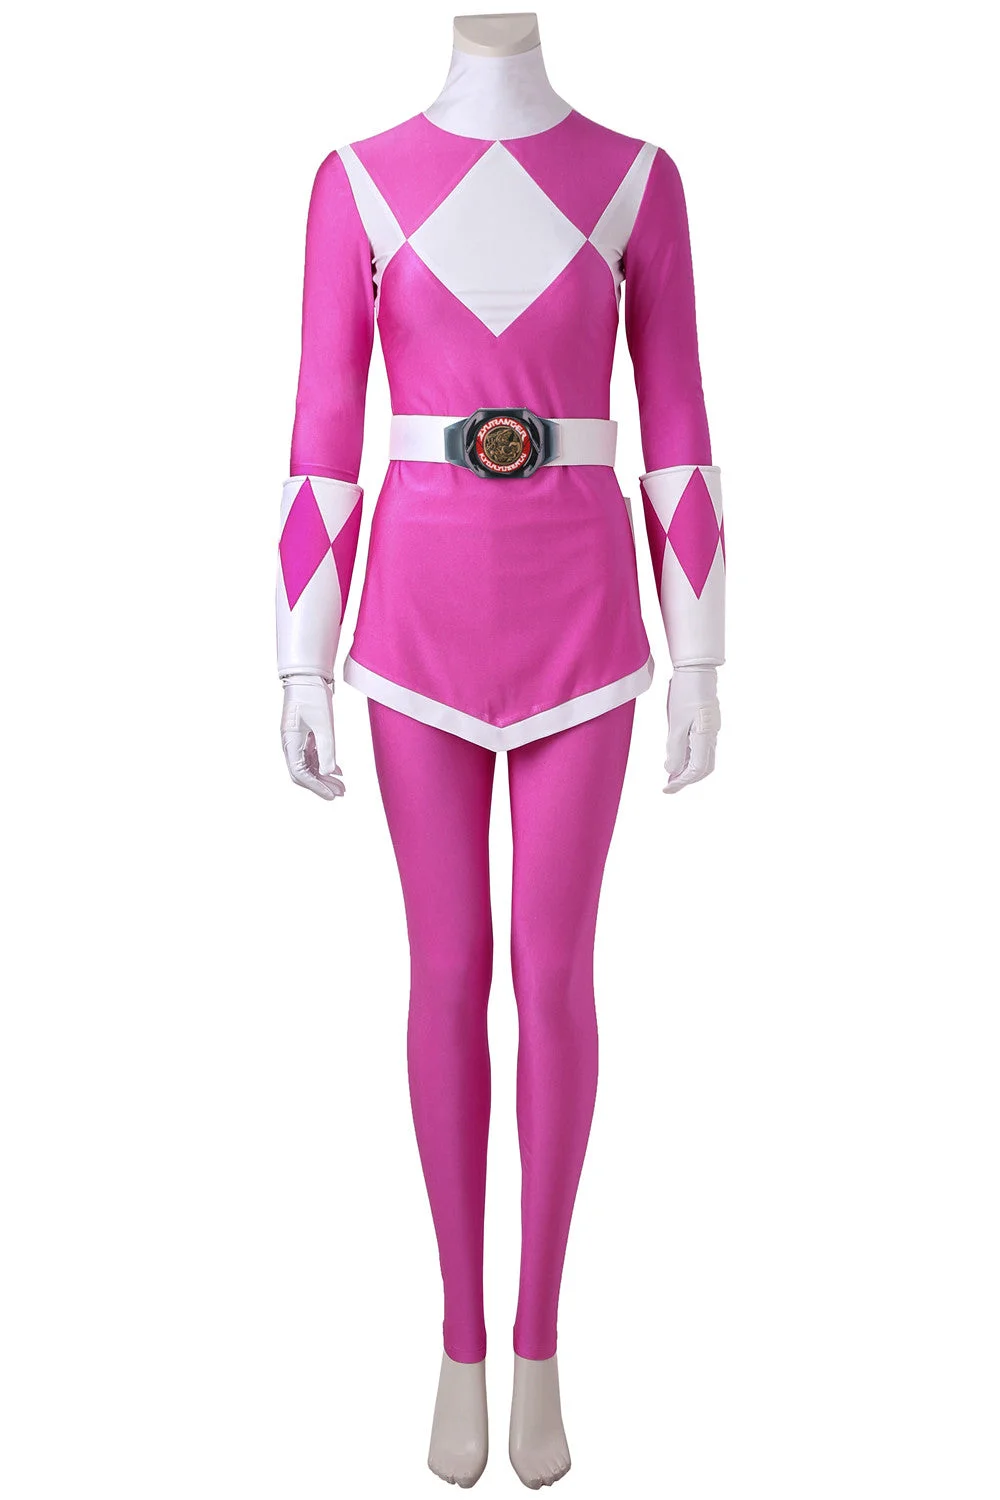 Mighty Morphin Power Rangers Pink Ranger Cosplay Costume